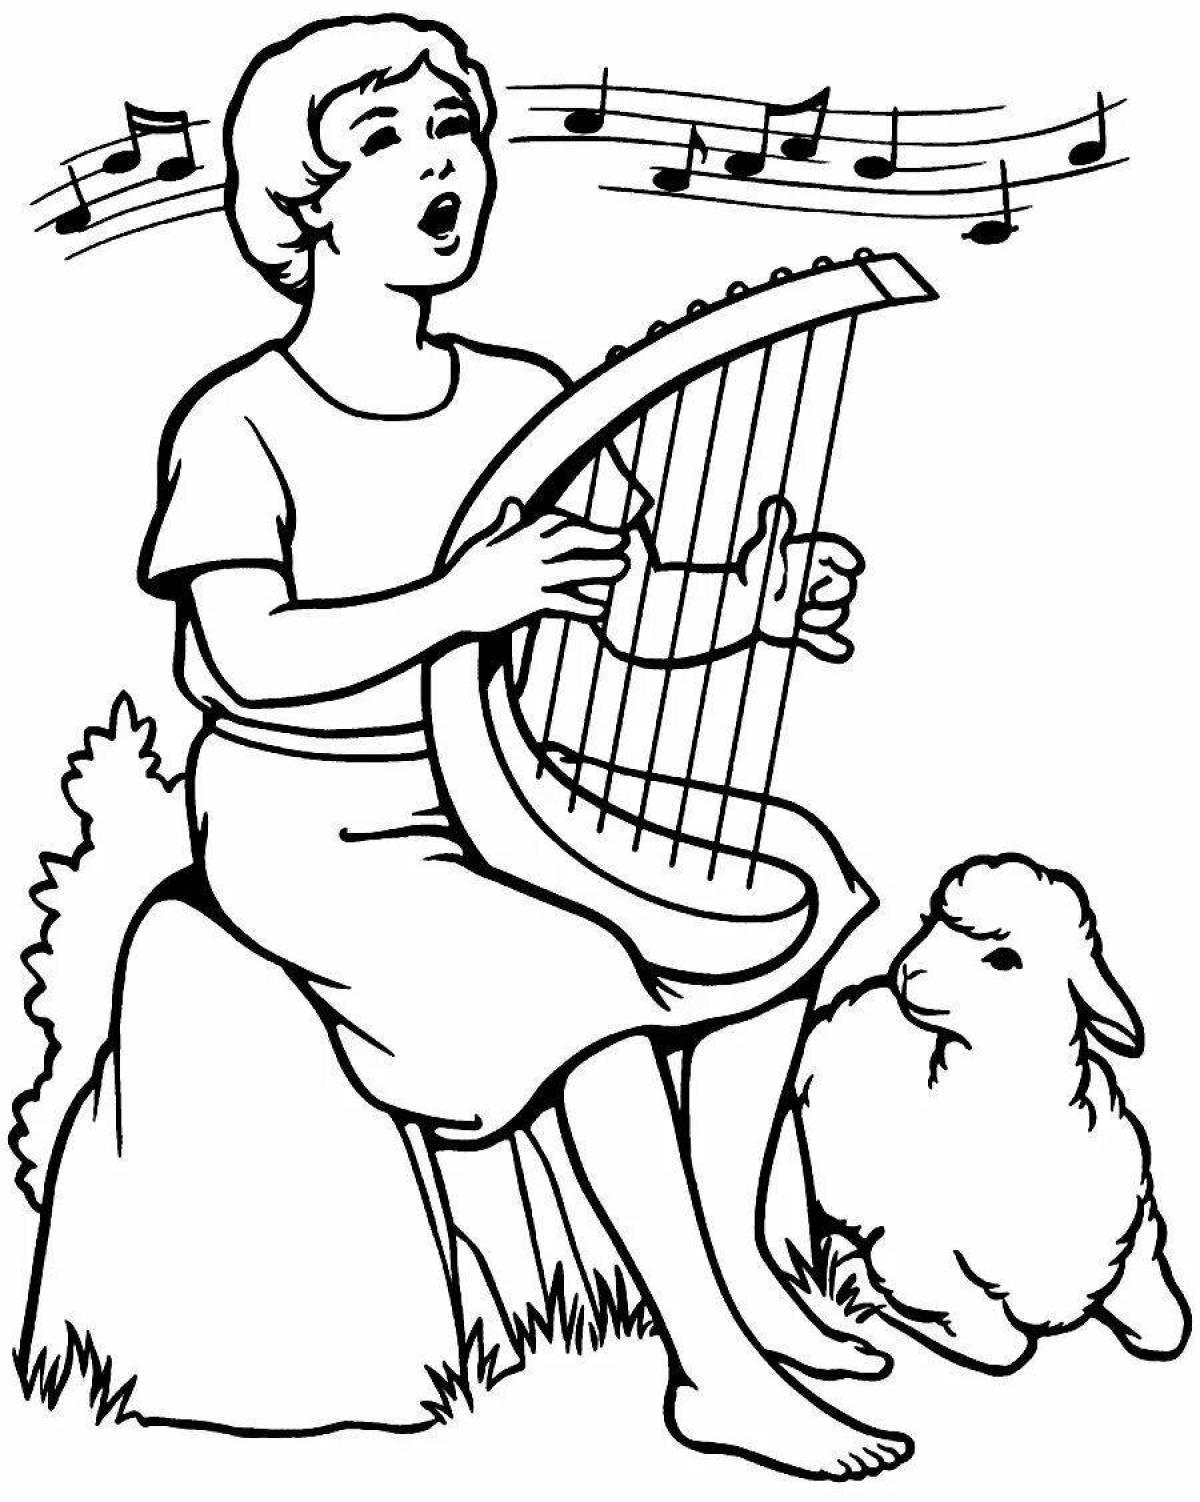 Happy harp drawing